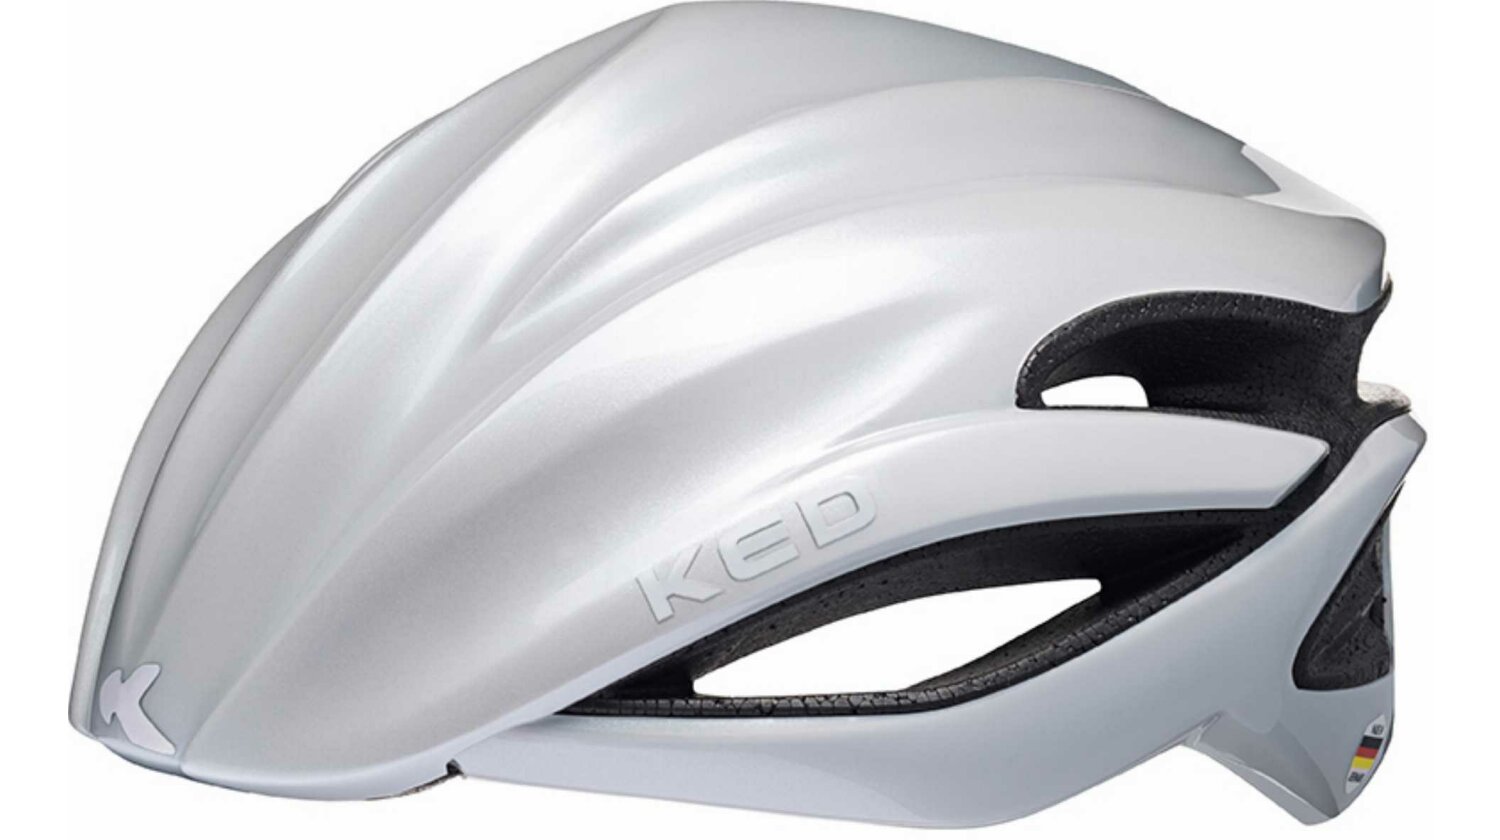 KED Rayzon Race Rennrad-Helm white M/55-59 cm